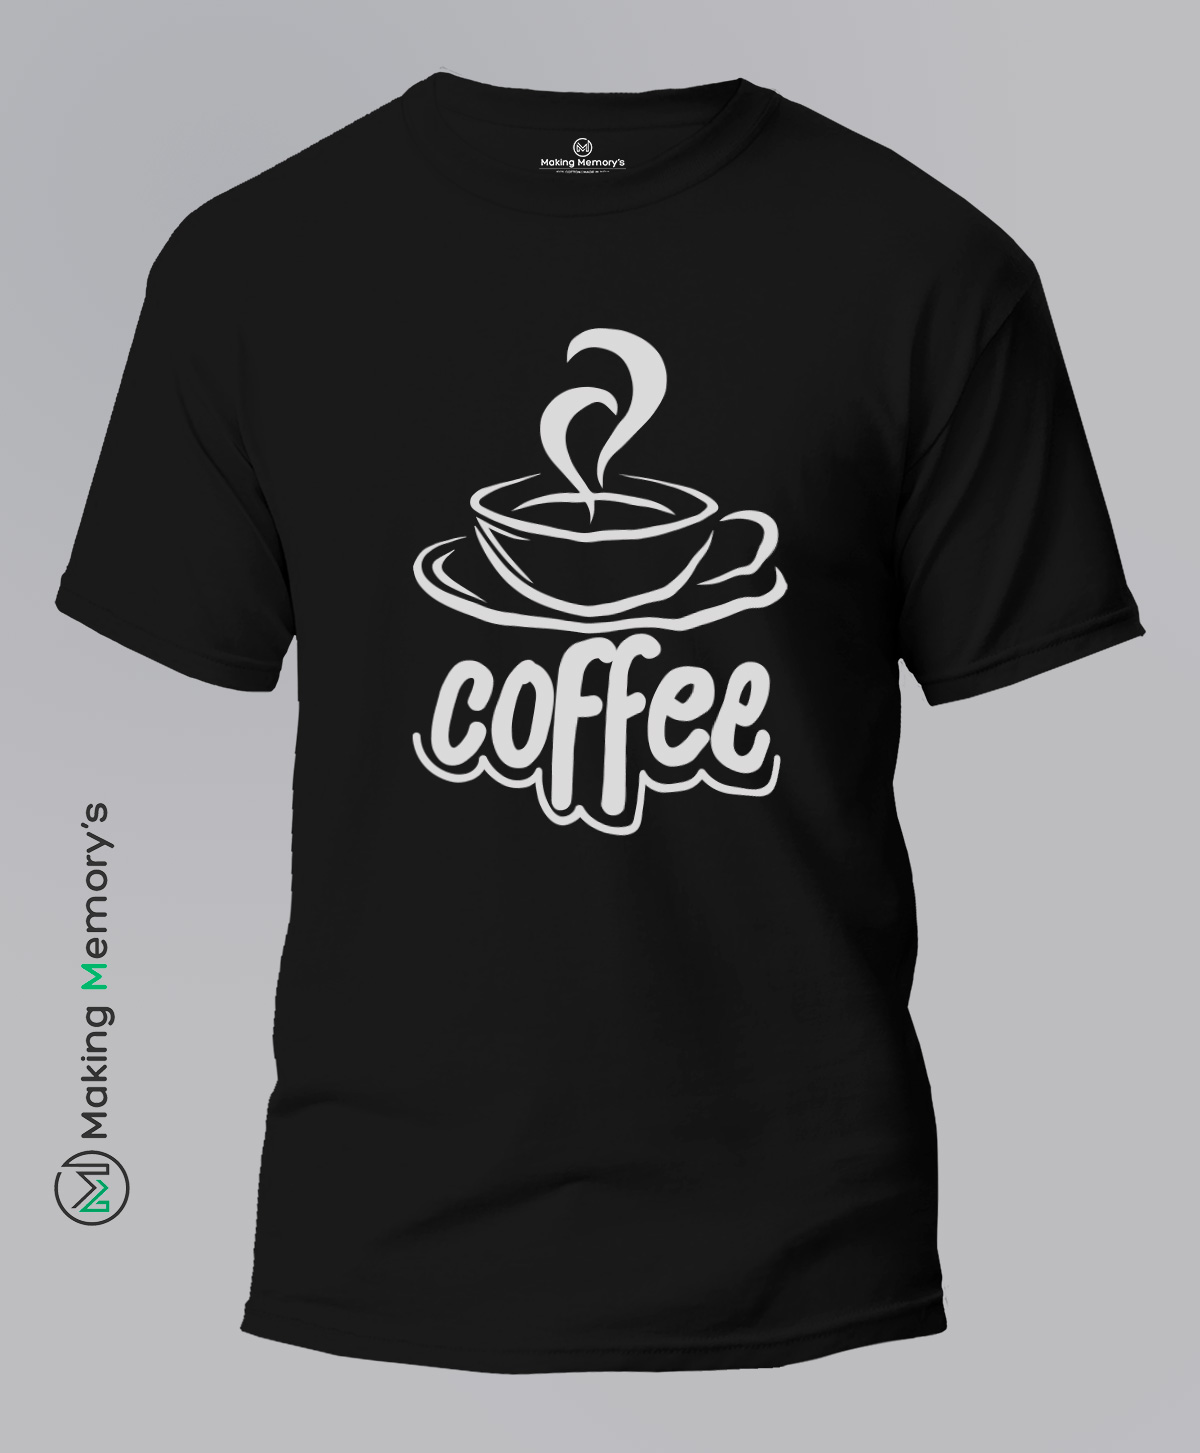 The-Coffee-Black-T-Shirt